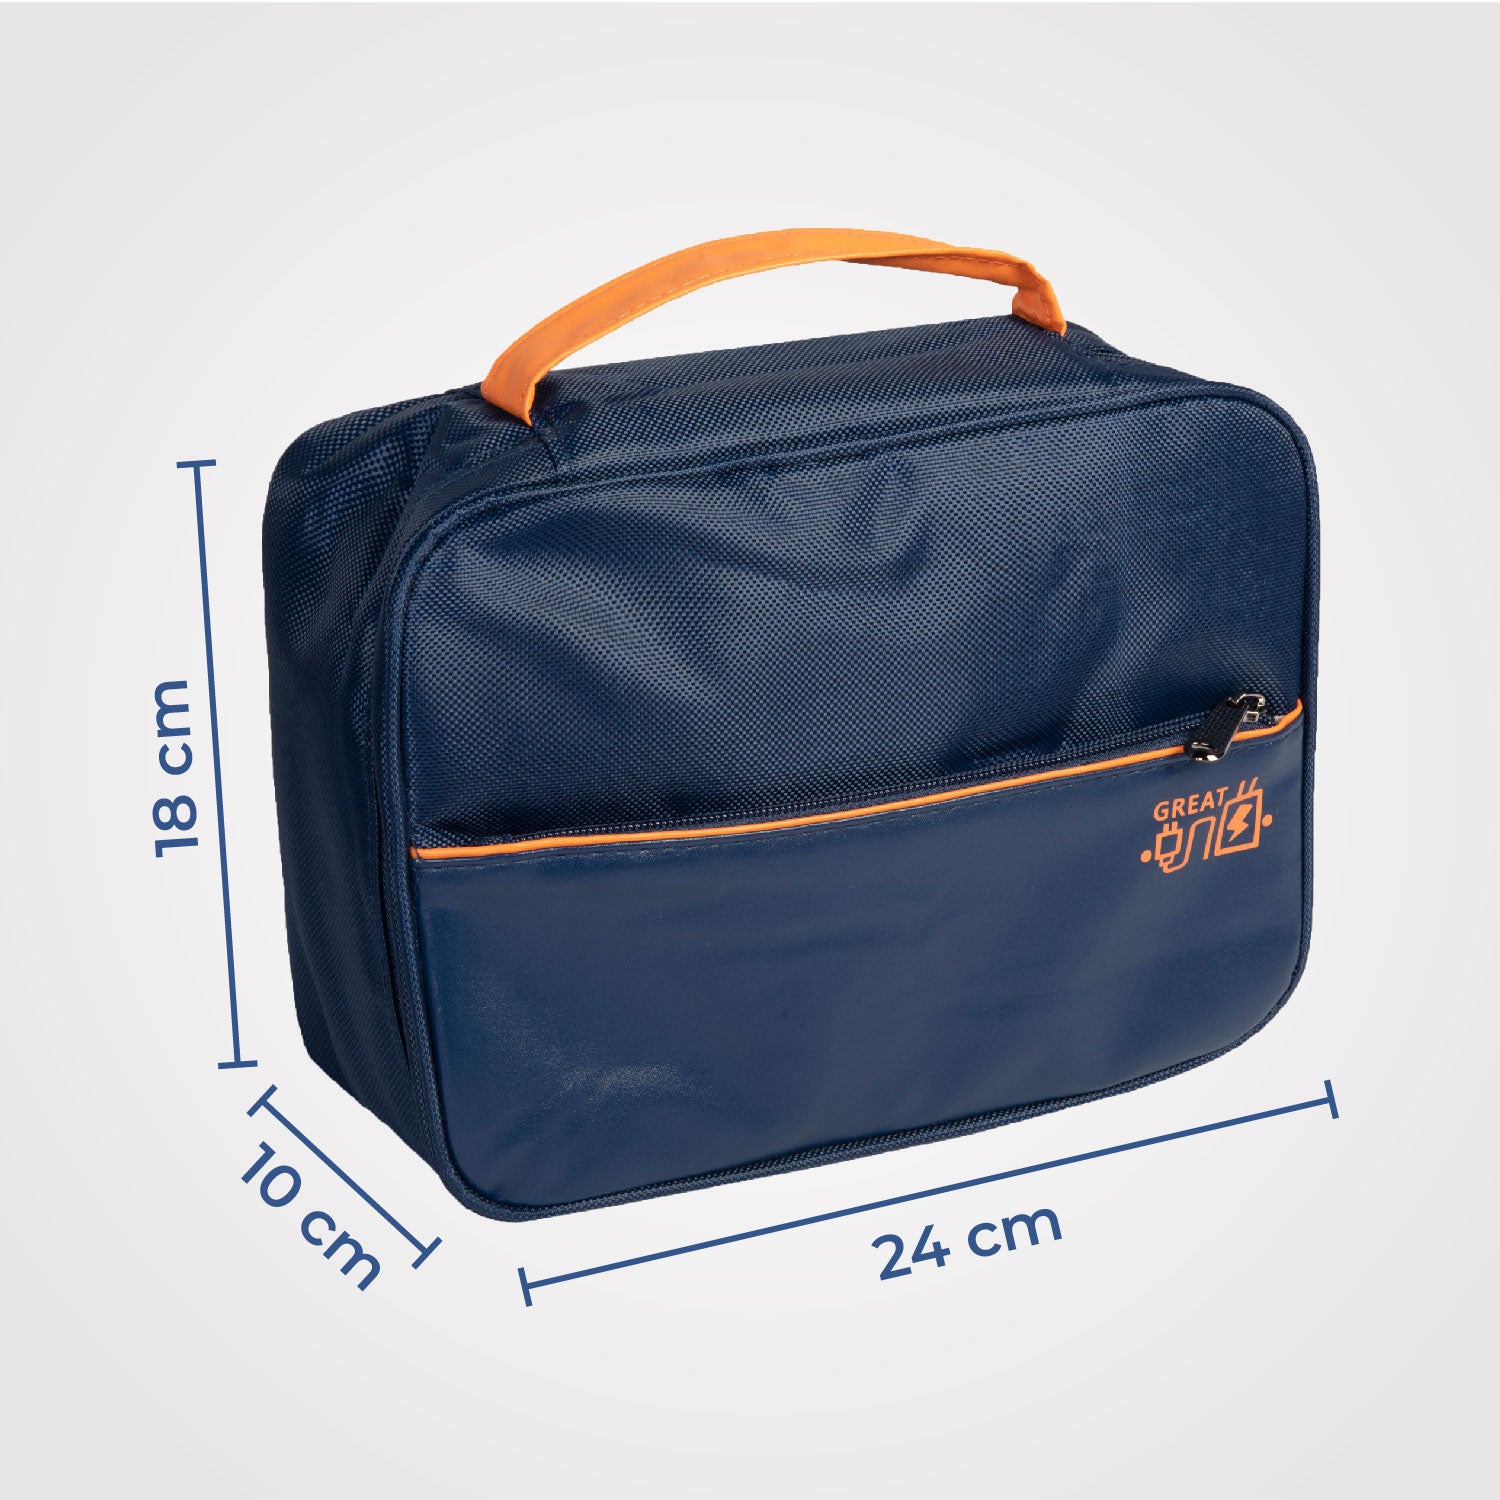 Tech tote |  Gadgets Travel Storage Organizer Bag